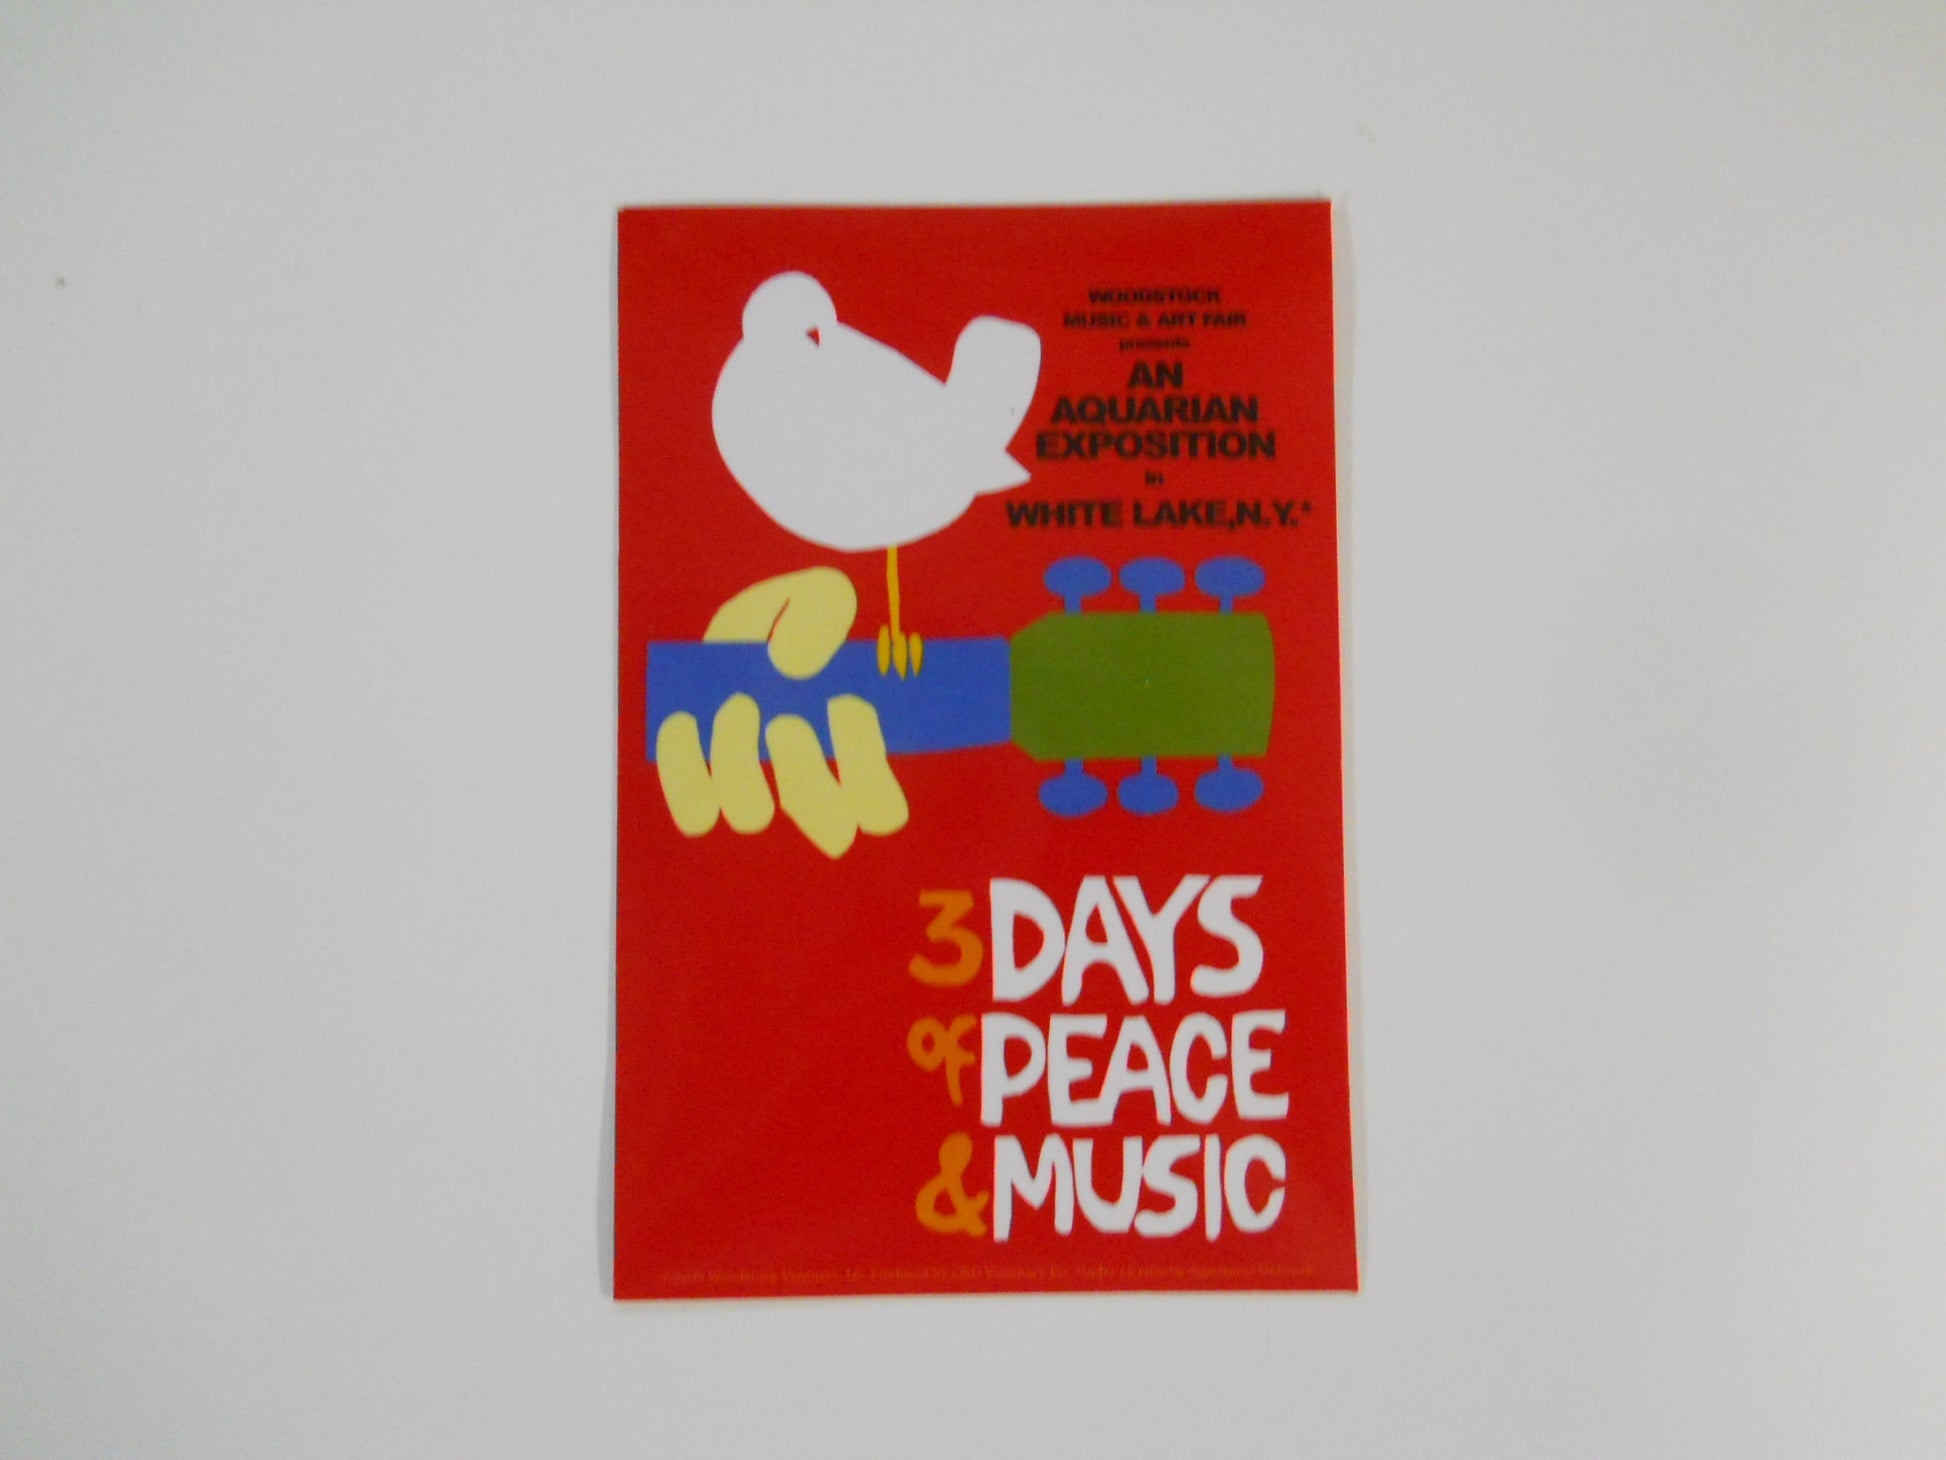 Woodstock Classic Sticker - HalfMoonMusic